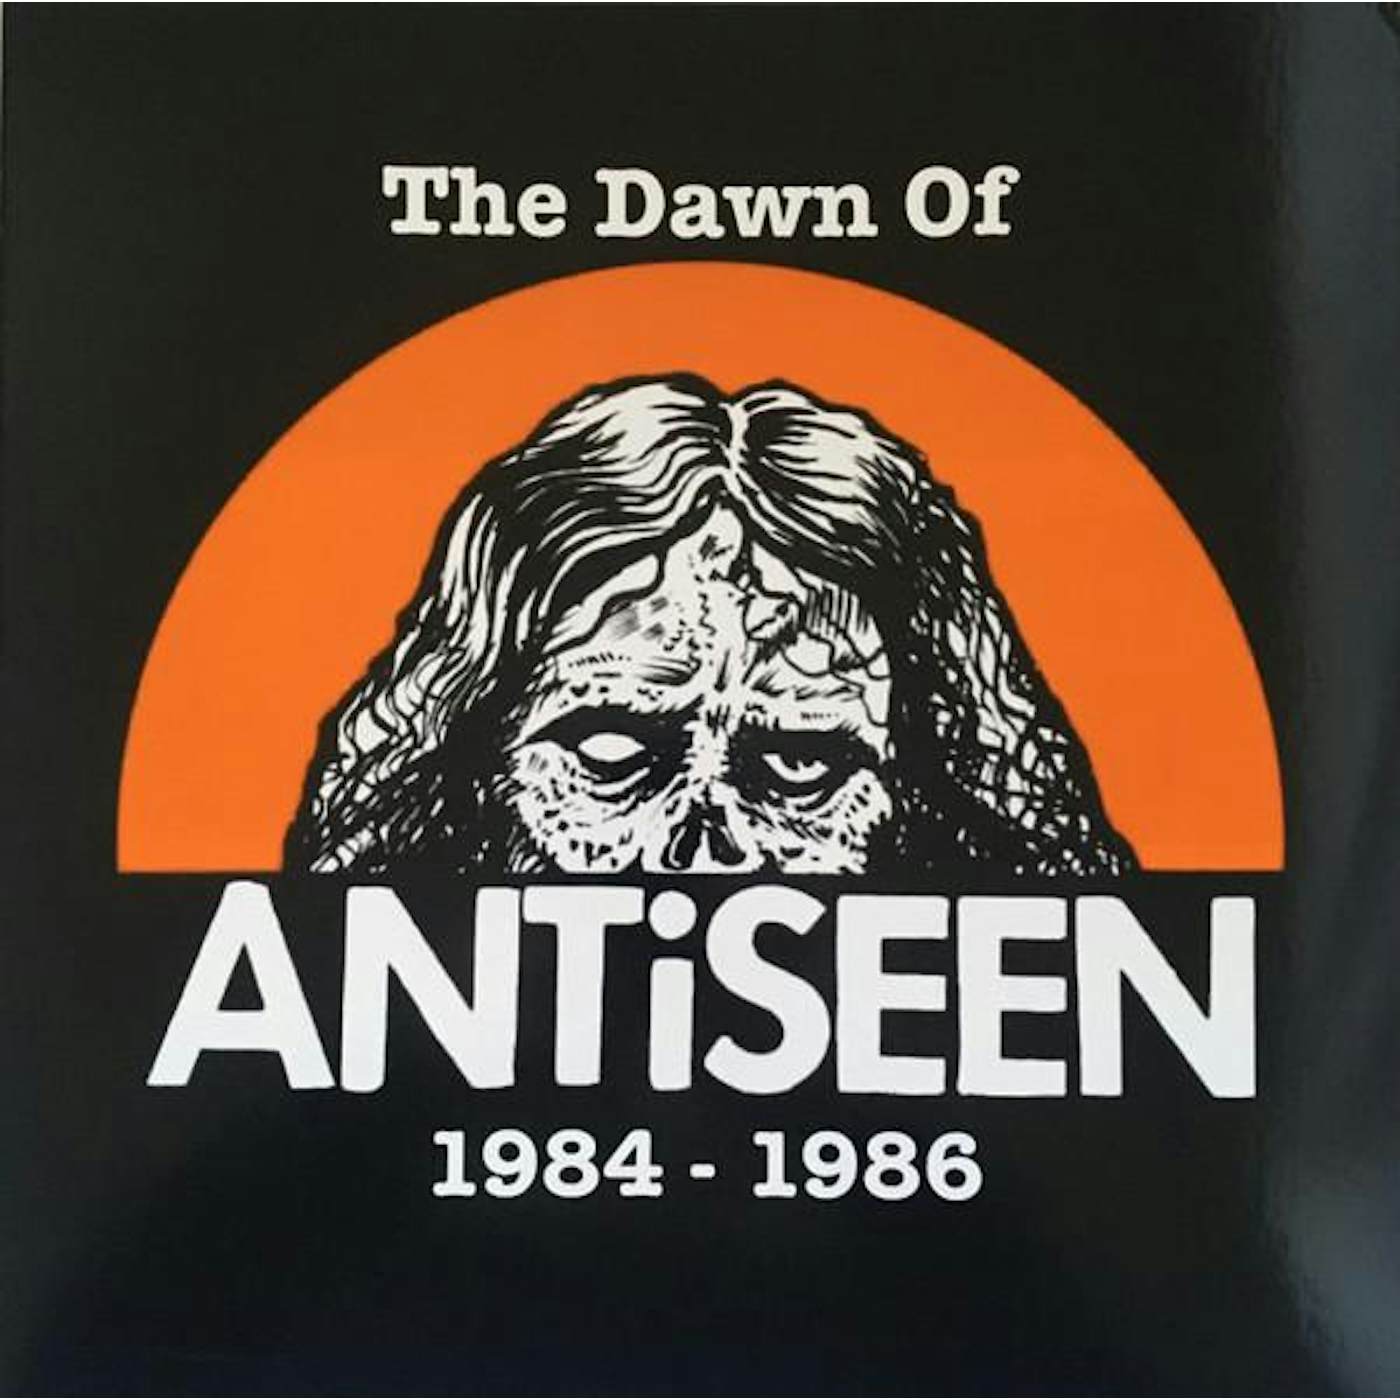 DAWN OF ANTISEEN Vinyl Record